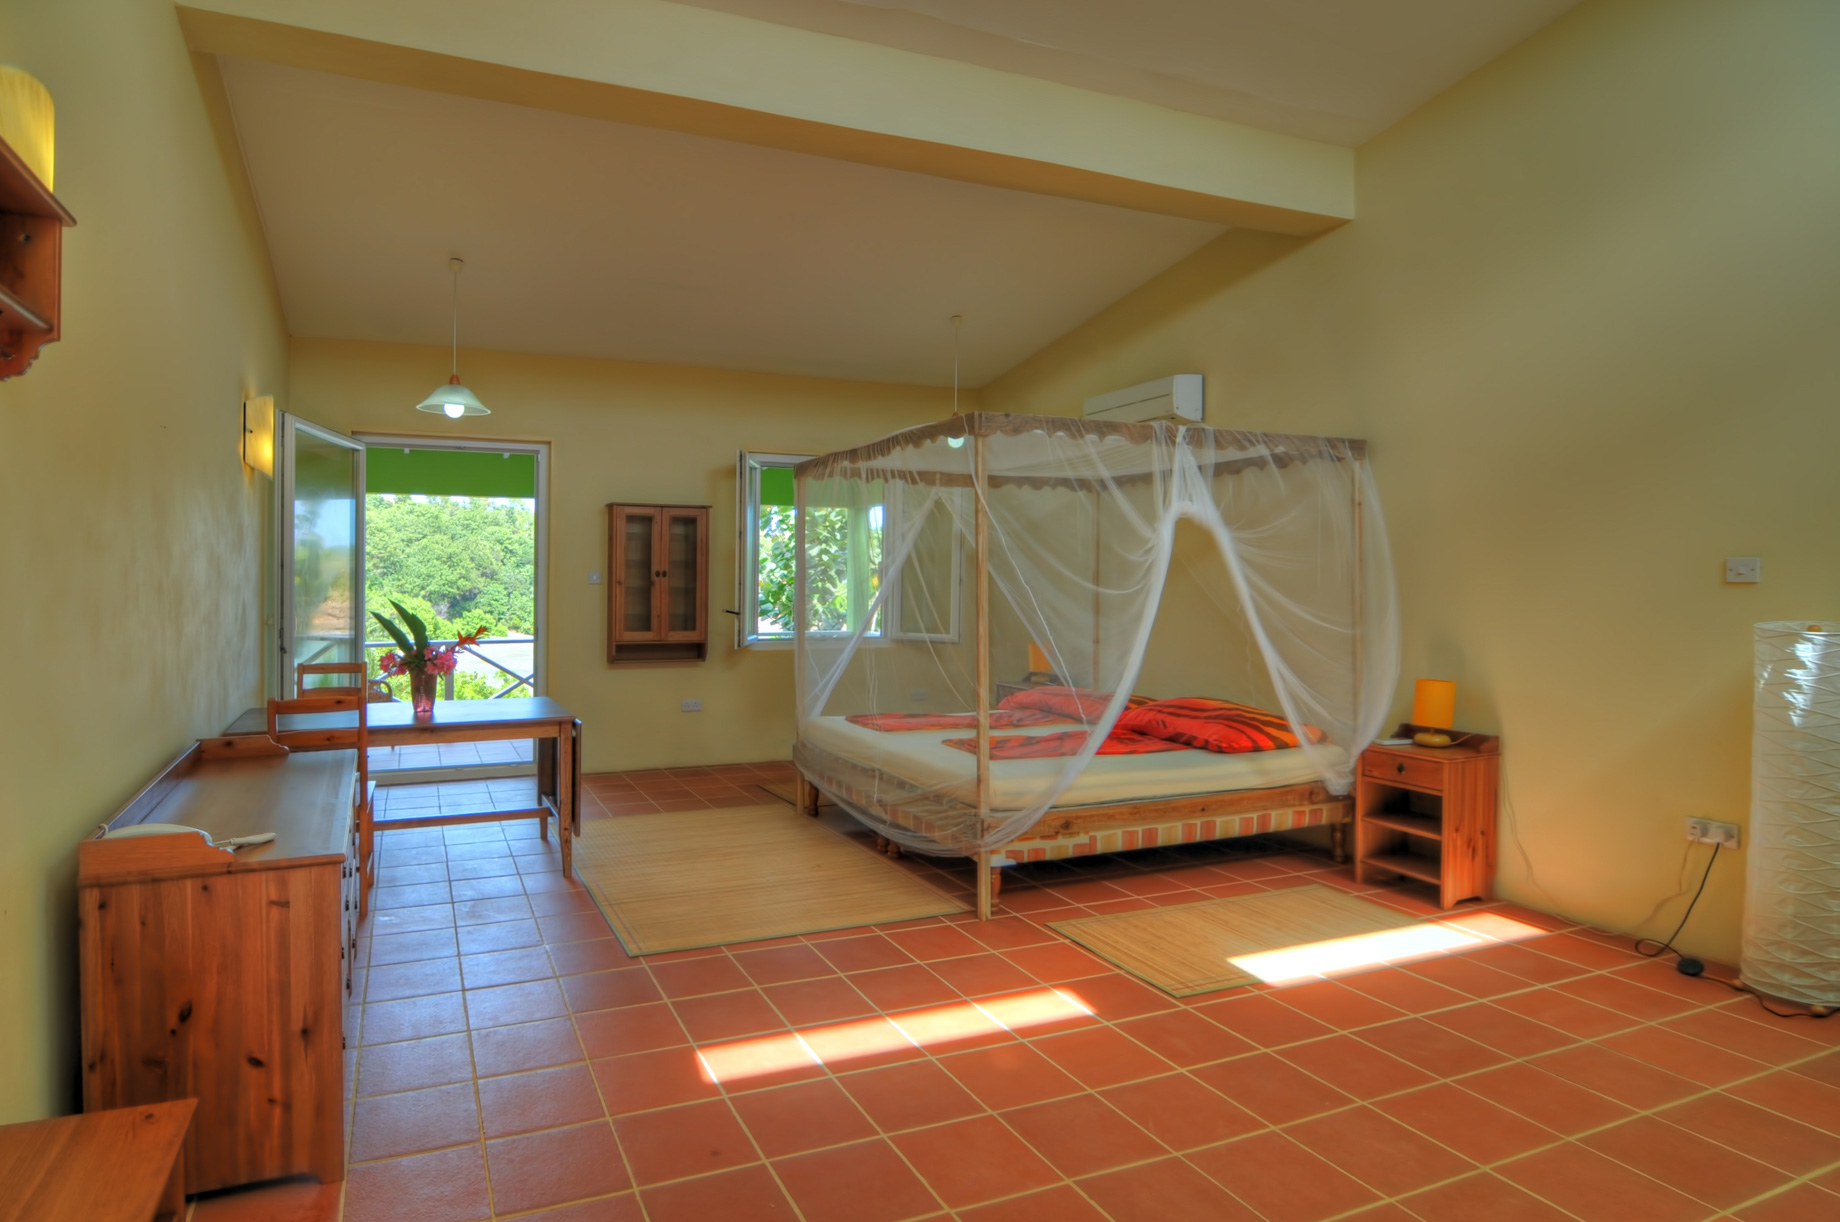 Caribbean Hideaway – Cabier Ocean Lodge, Crochu, St. Andrew’s, Grenada